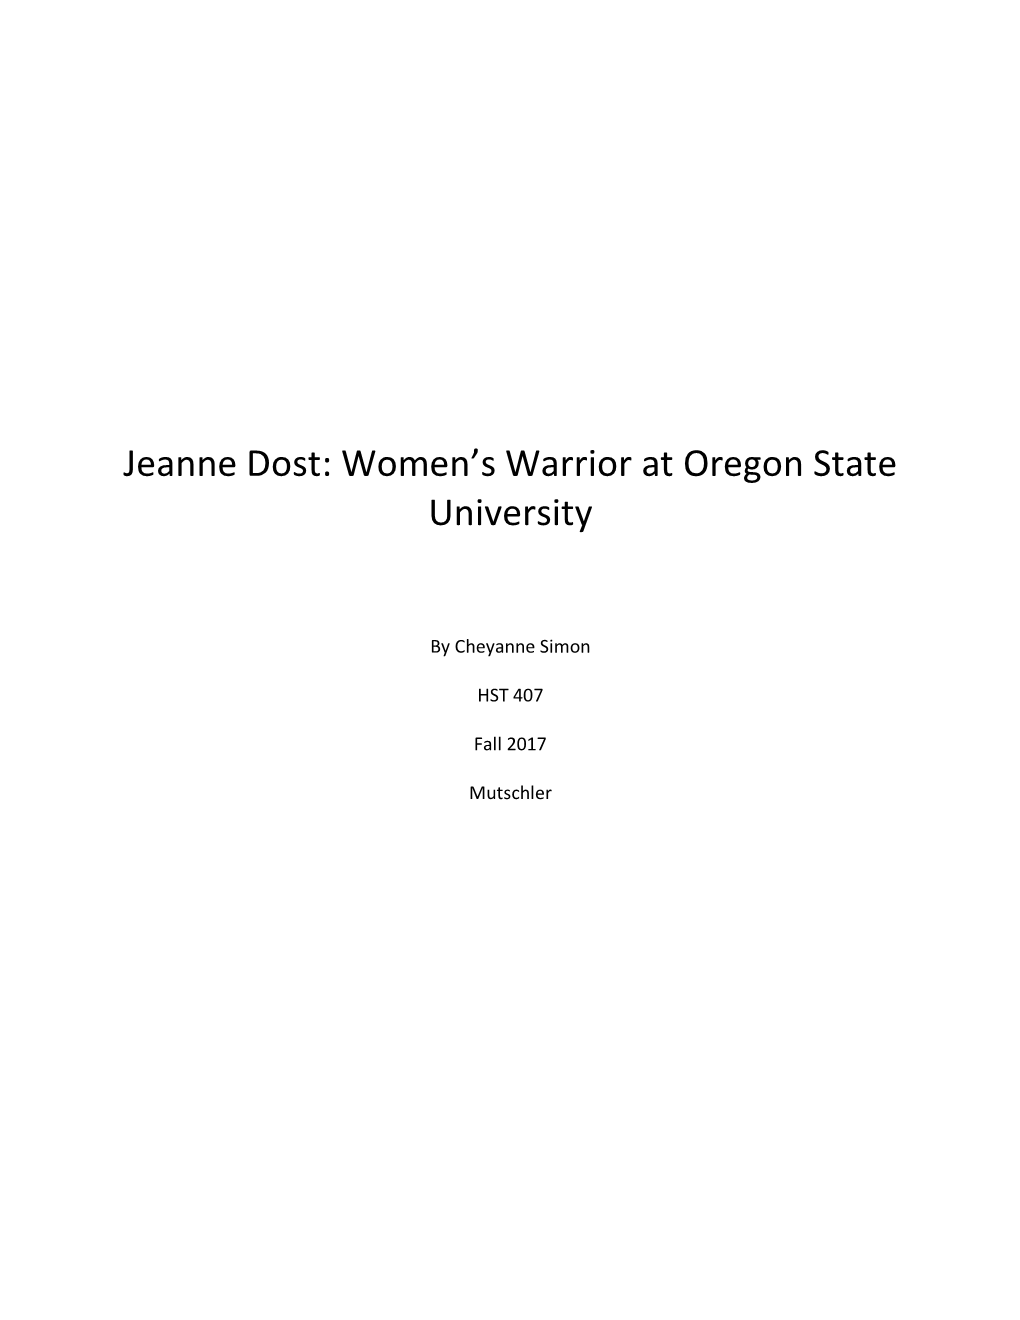 Jeanne Dost: Women's Warrior at Oregon State University